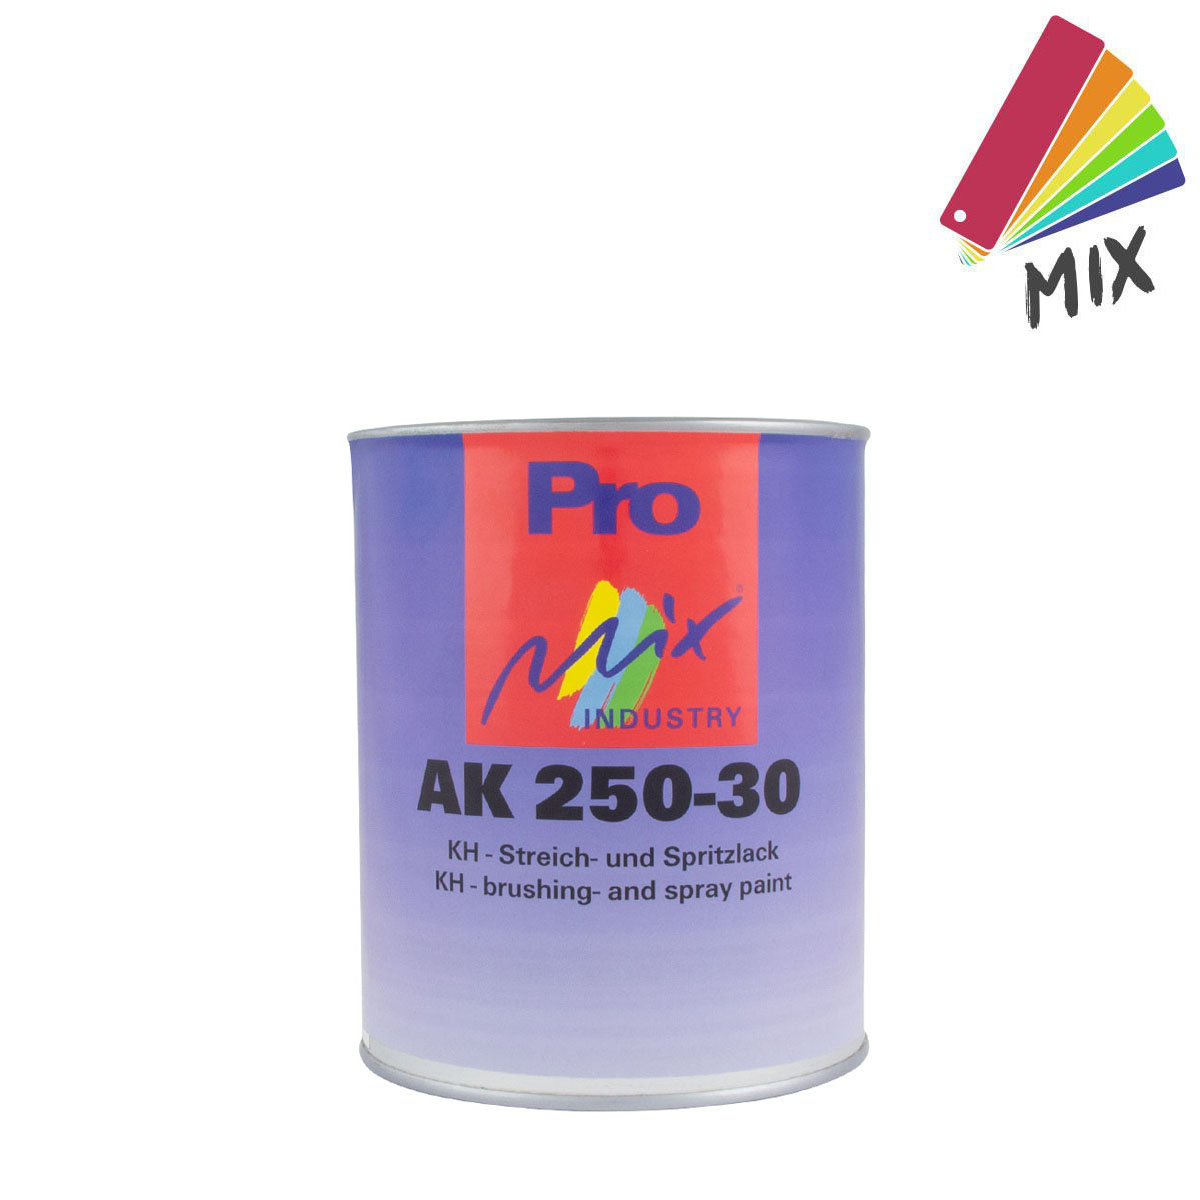 Pro-mix_AK-250-30-streichundstpritzlack_1kg_gross